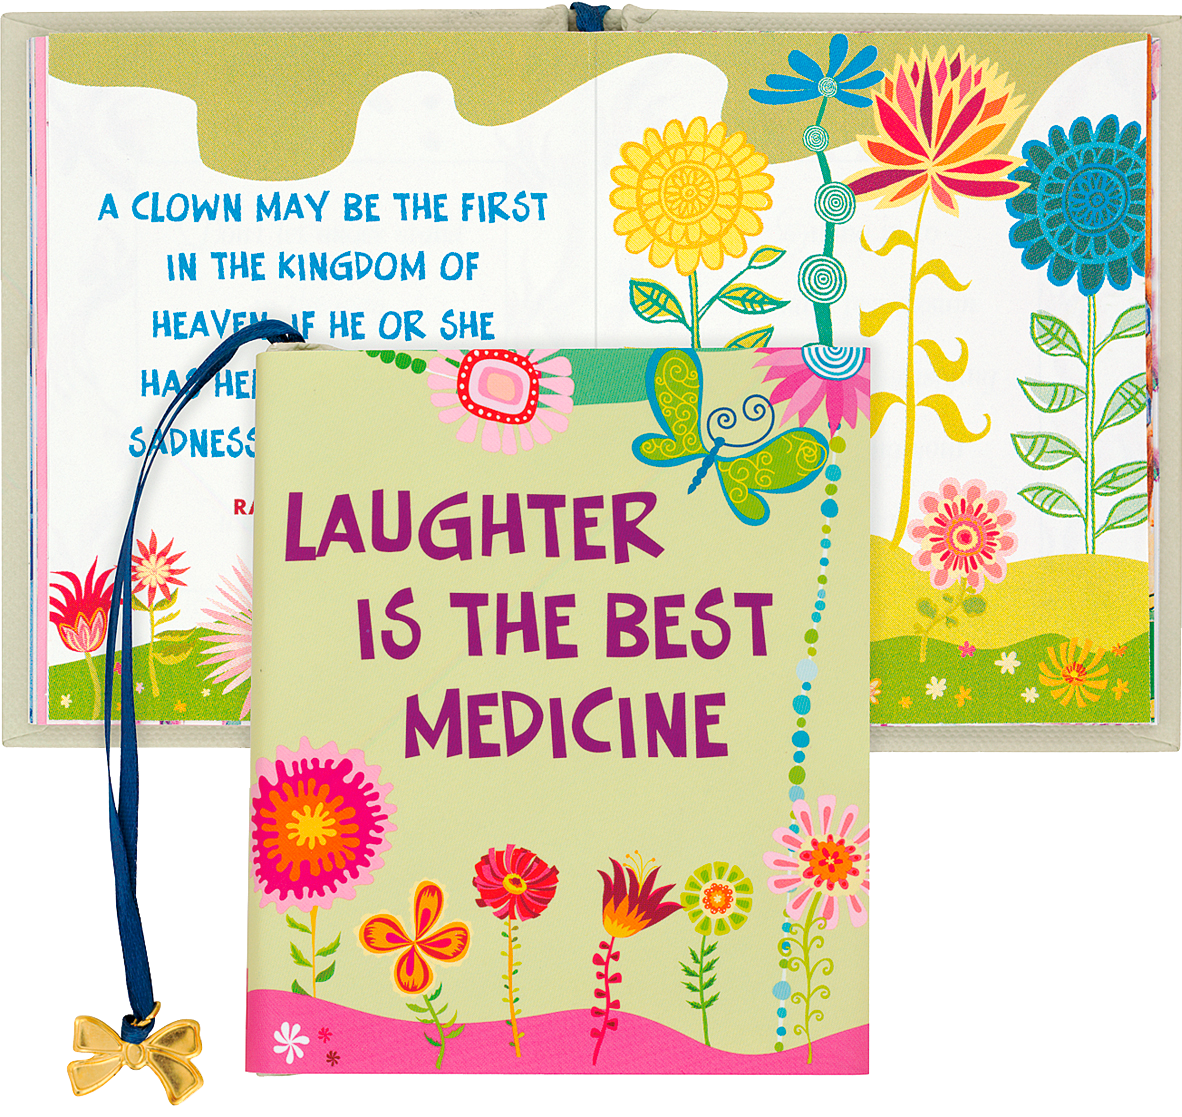 La risa es la mejor medicina mini libro